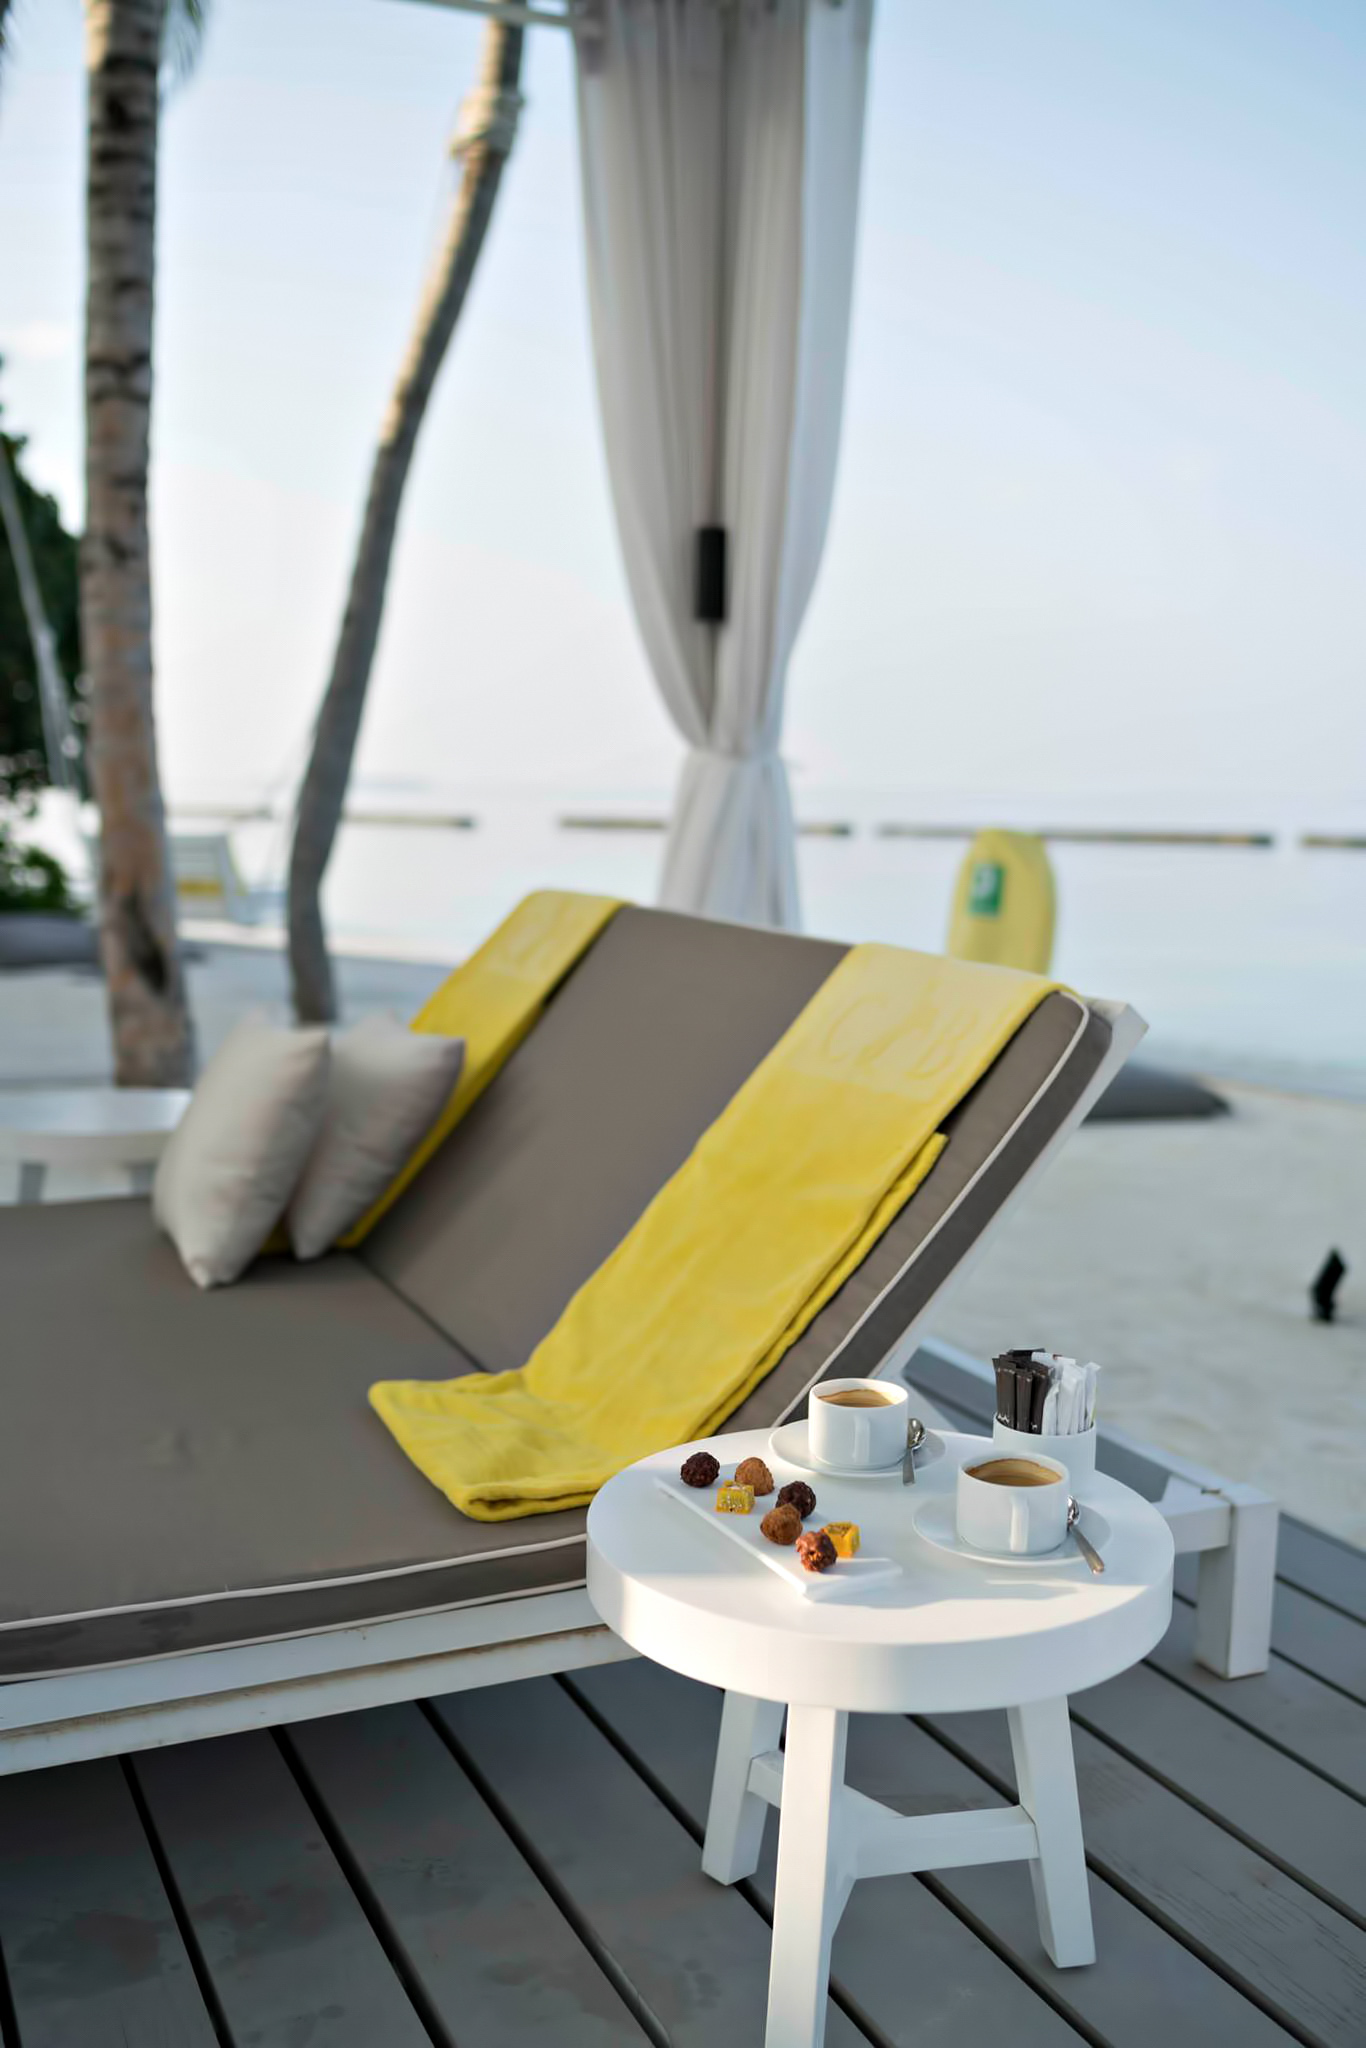 Cheval Blanc Randheli Resort – Noonu Atoll, Maldives – Private Island Beachfront Coffee and Desserts